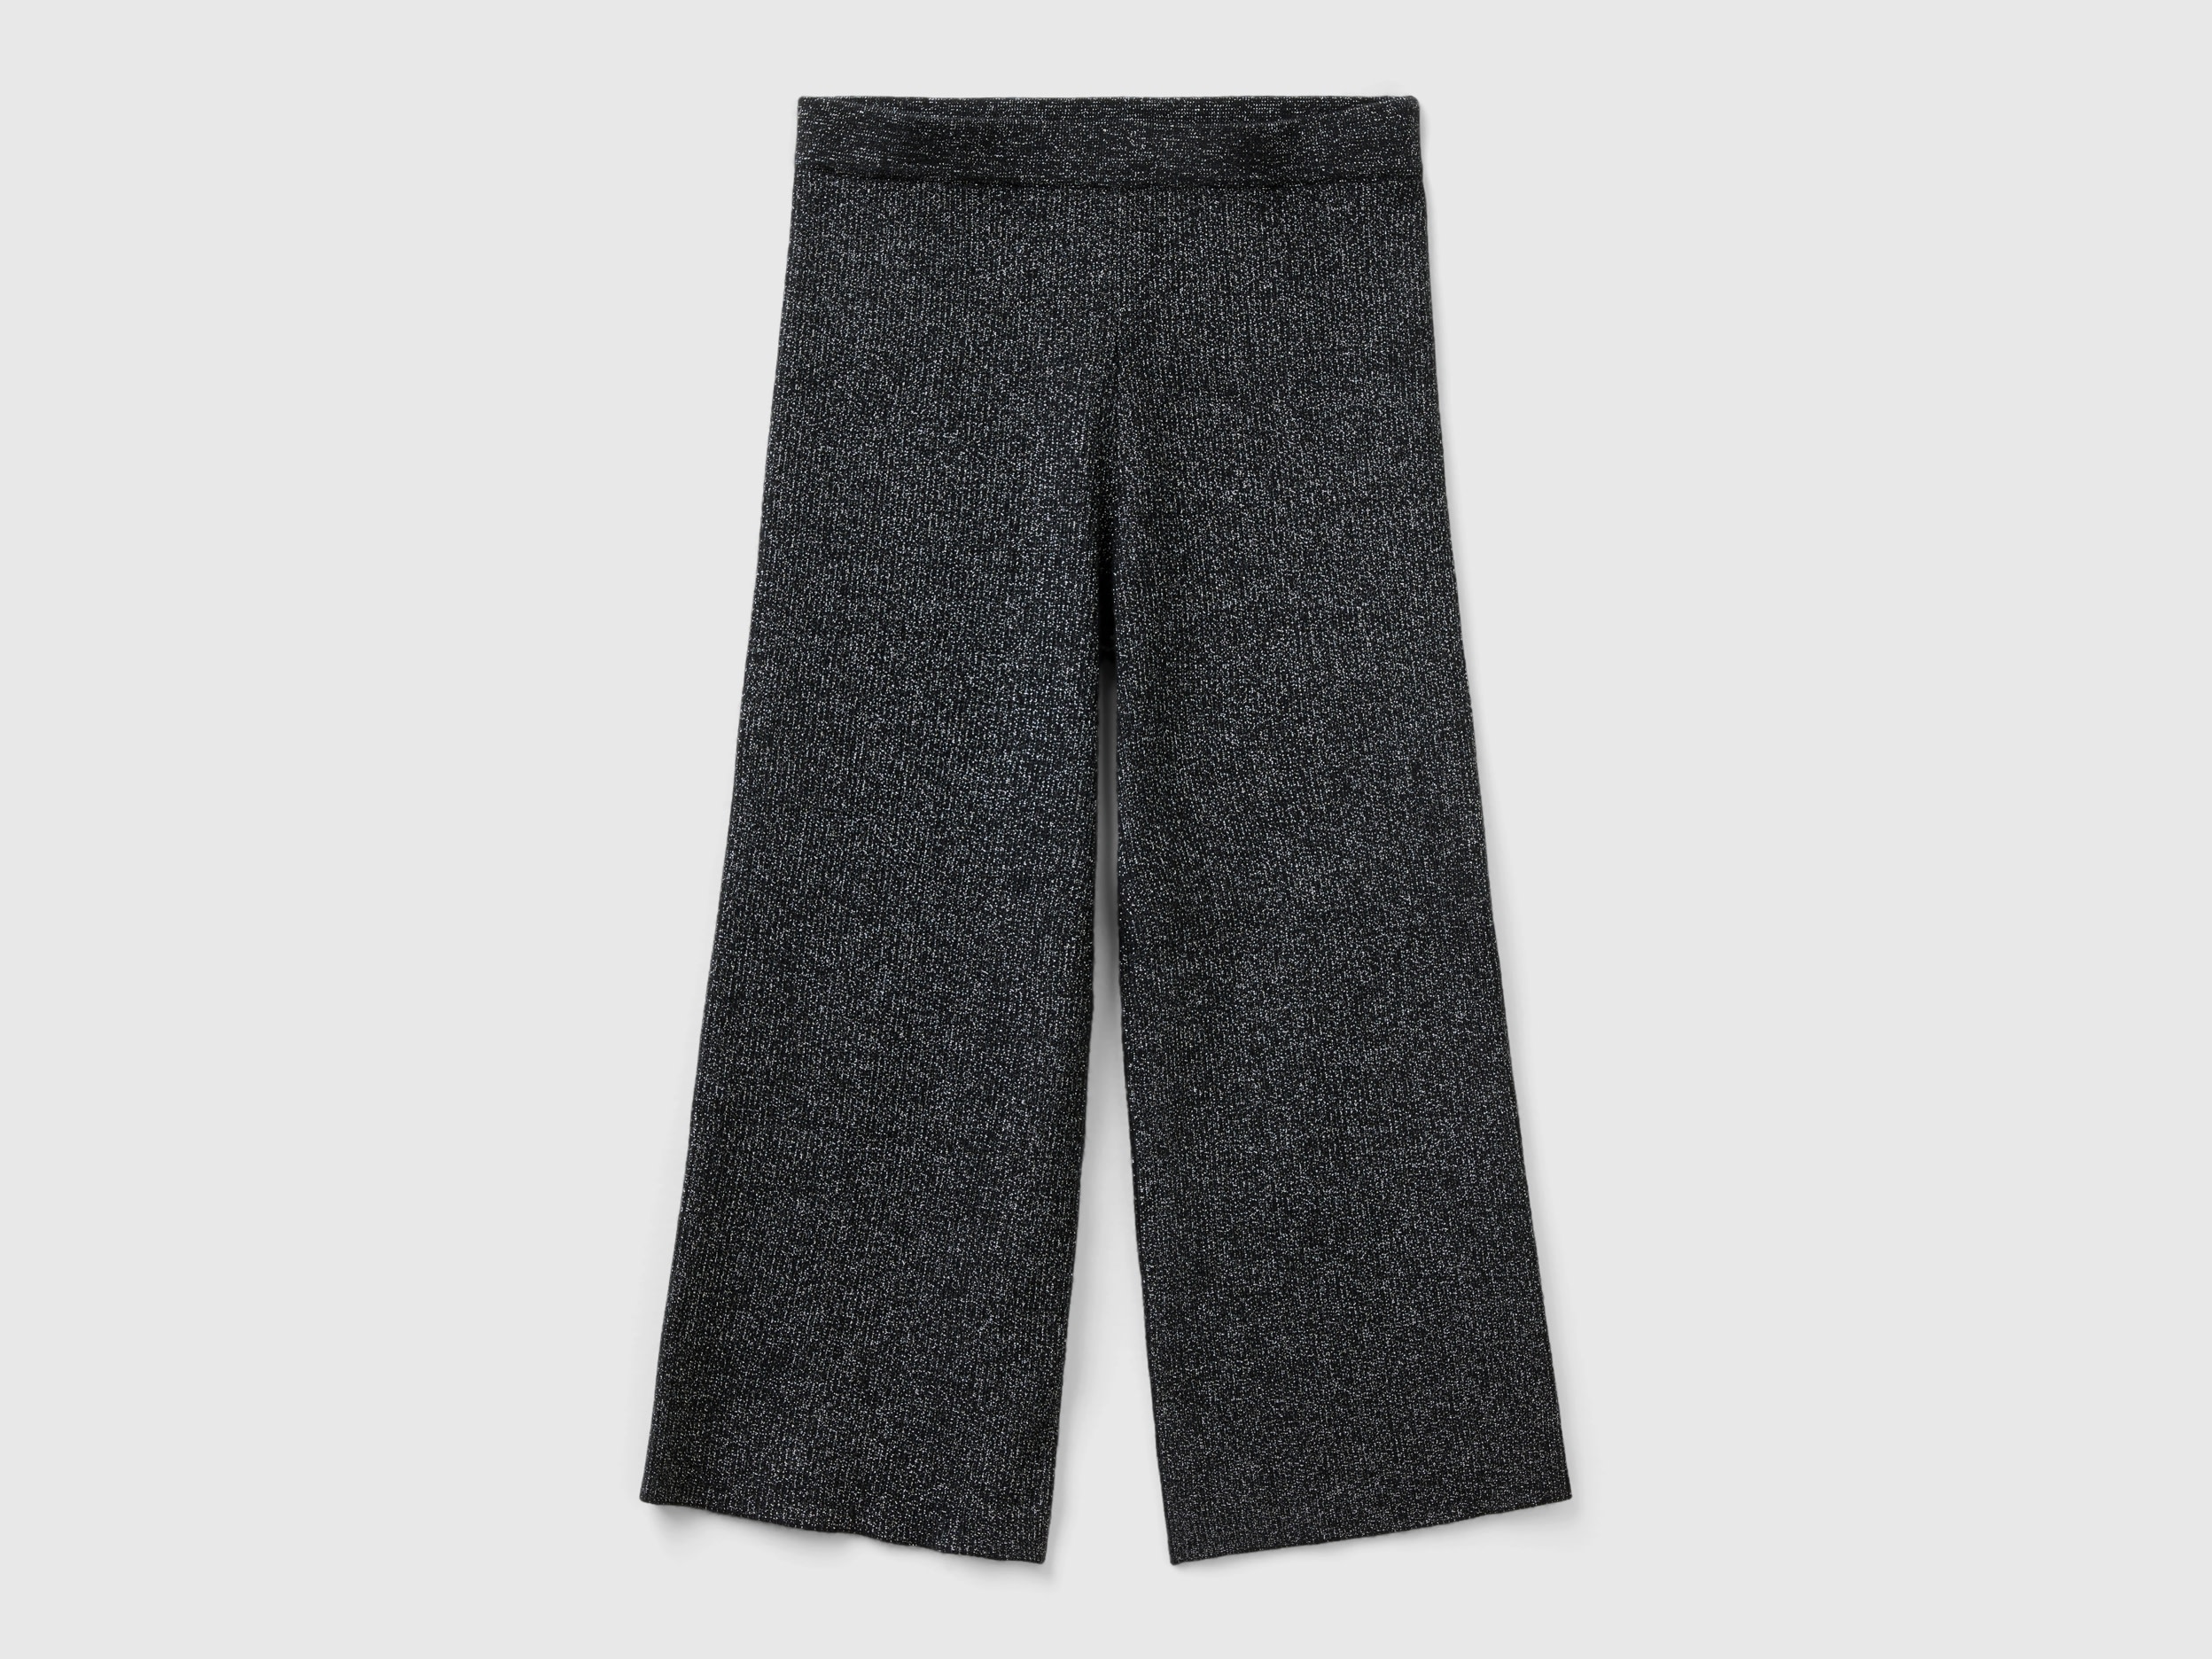 Benetton, Knit Pants With Lurex, size S, Black, Kids